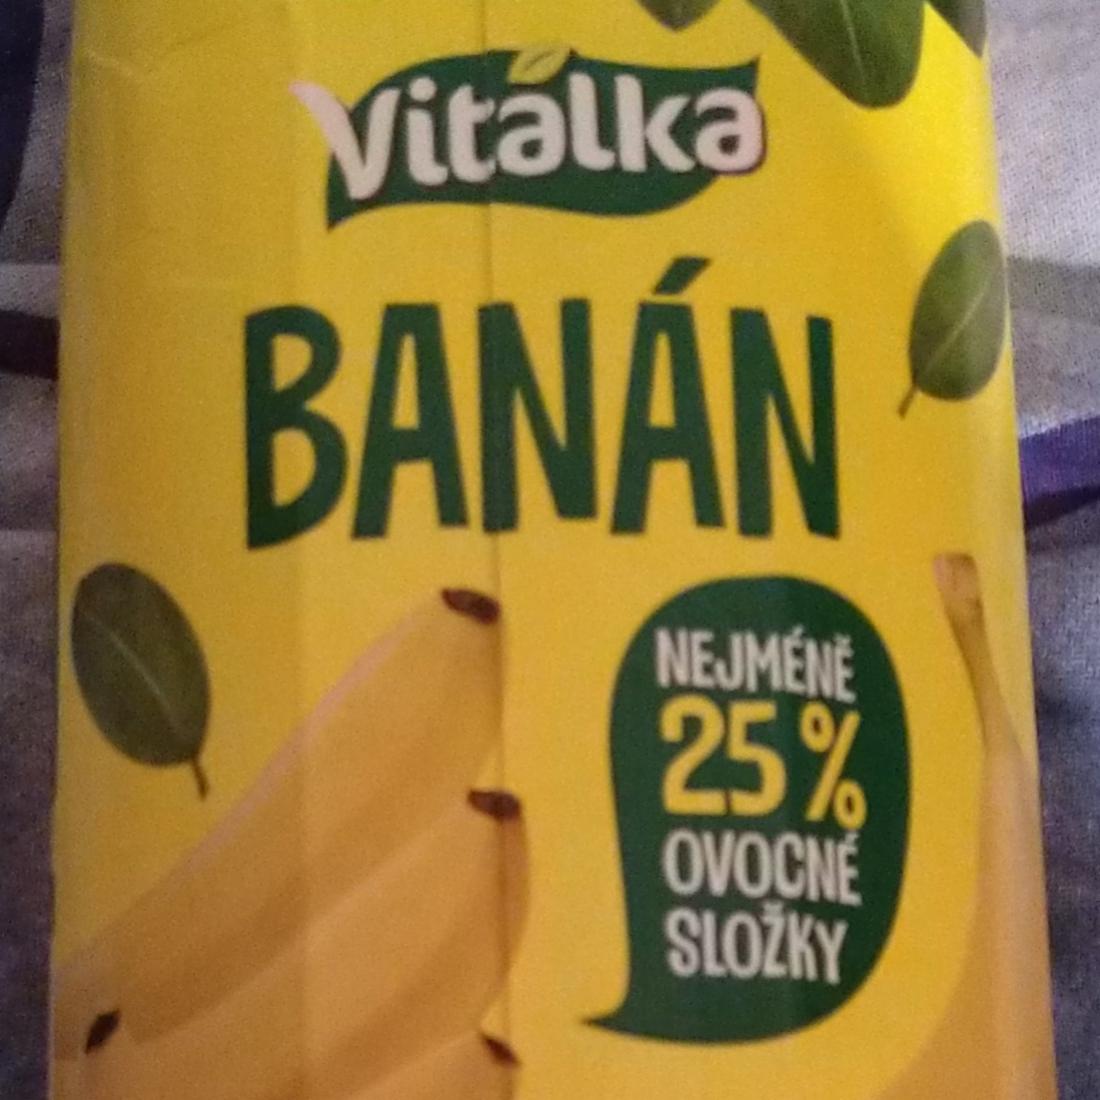 Fotografie - Banánový nektar Vitalka